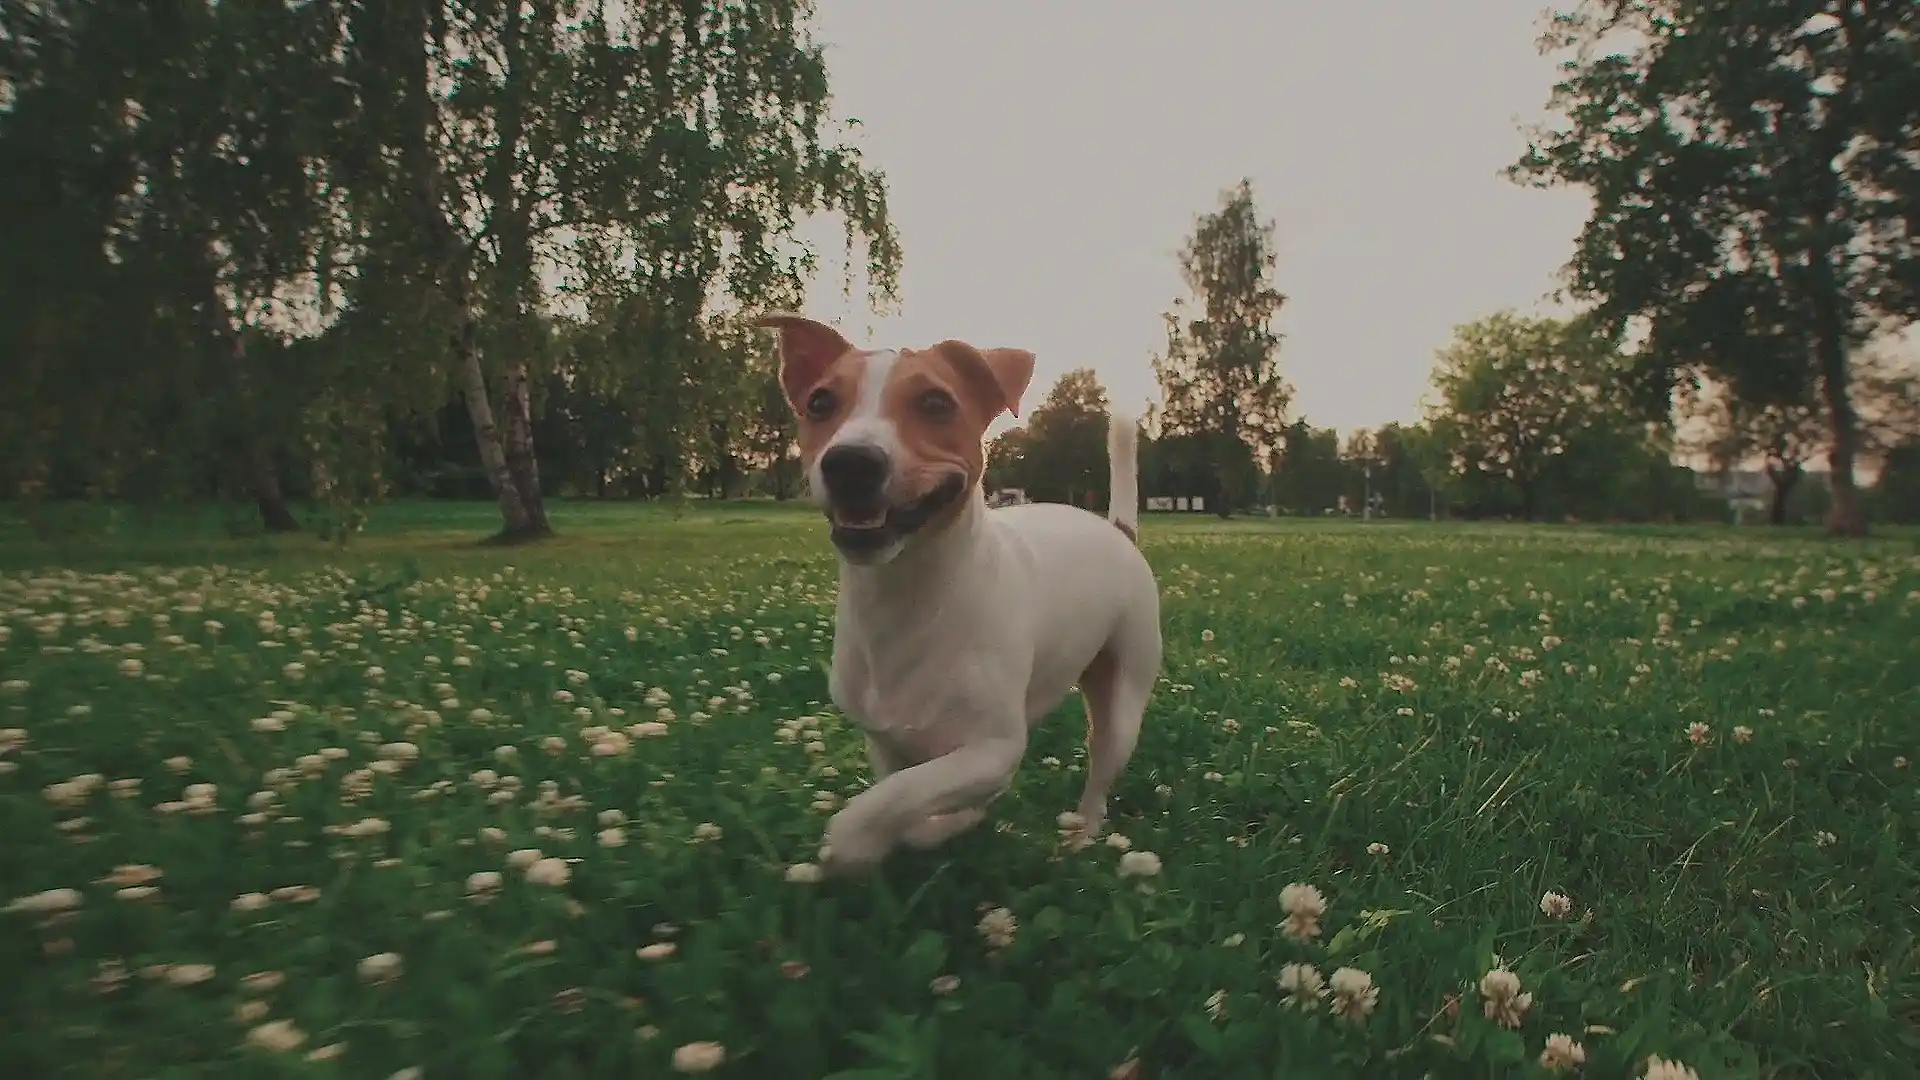 Jack russell terrier running through a field of flowers